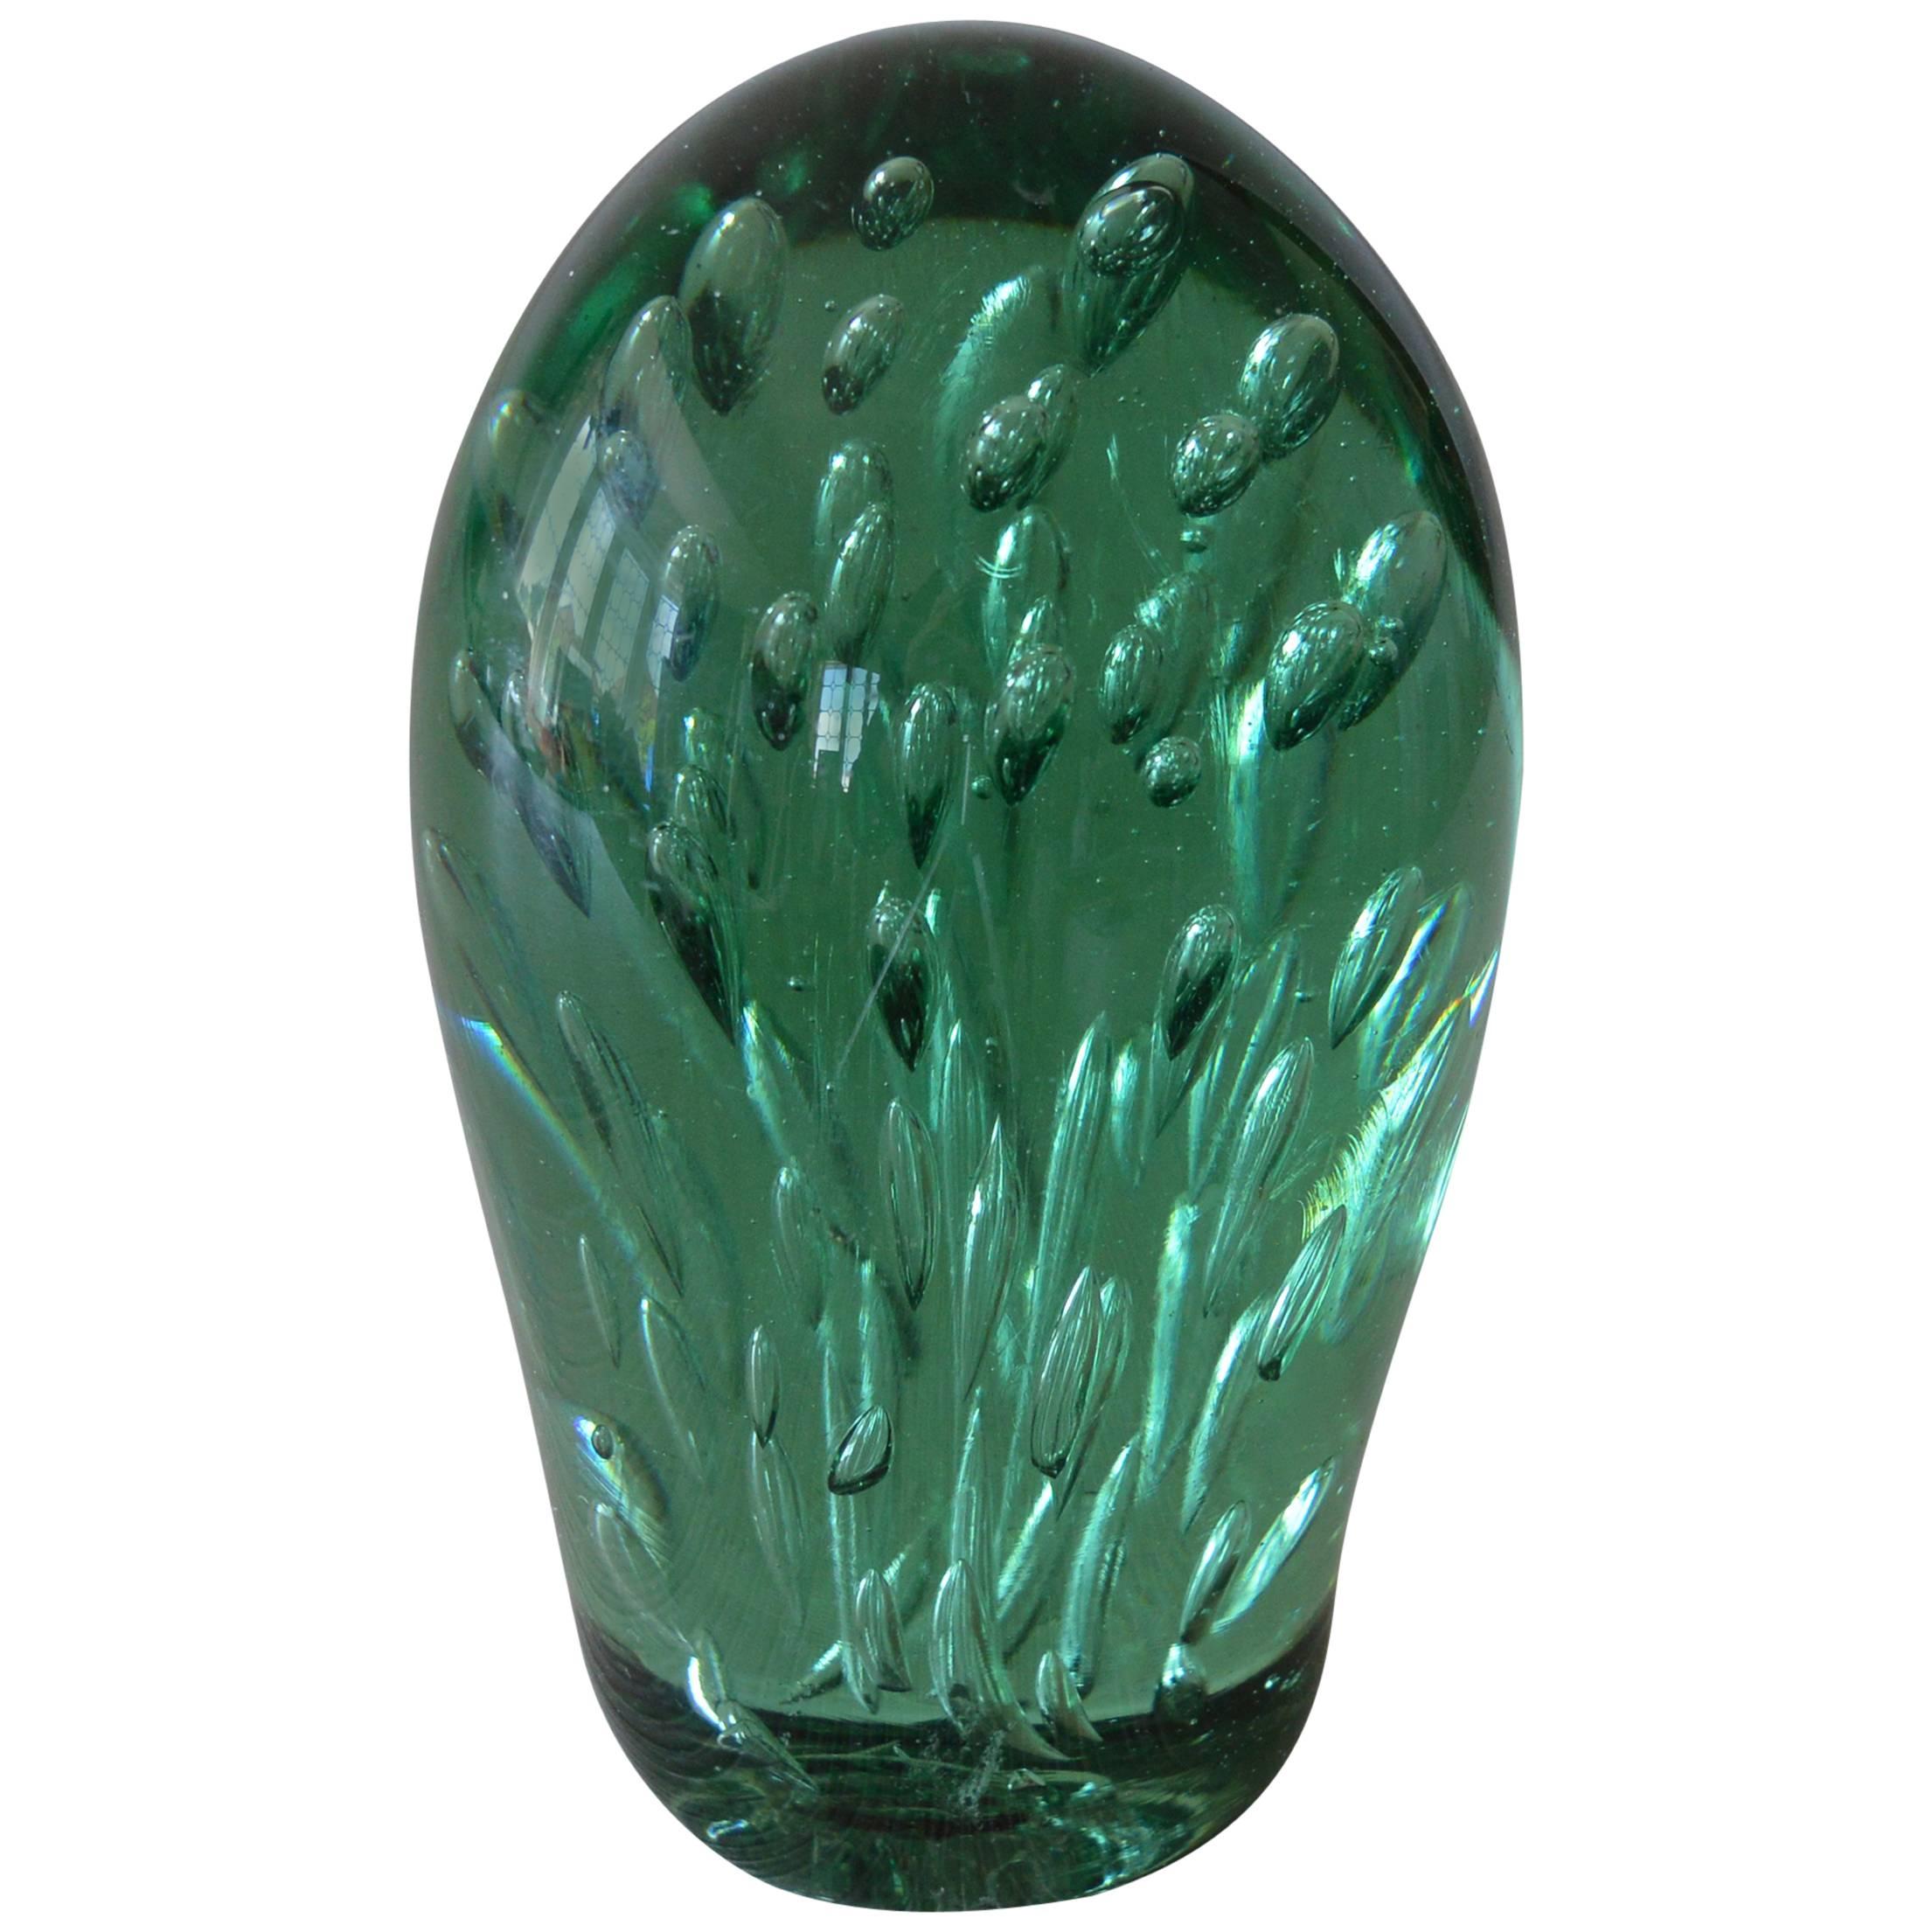 Striking Antique Green Glass Sculpture, English, 19th Century